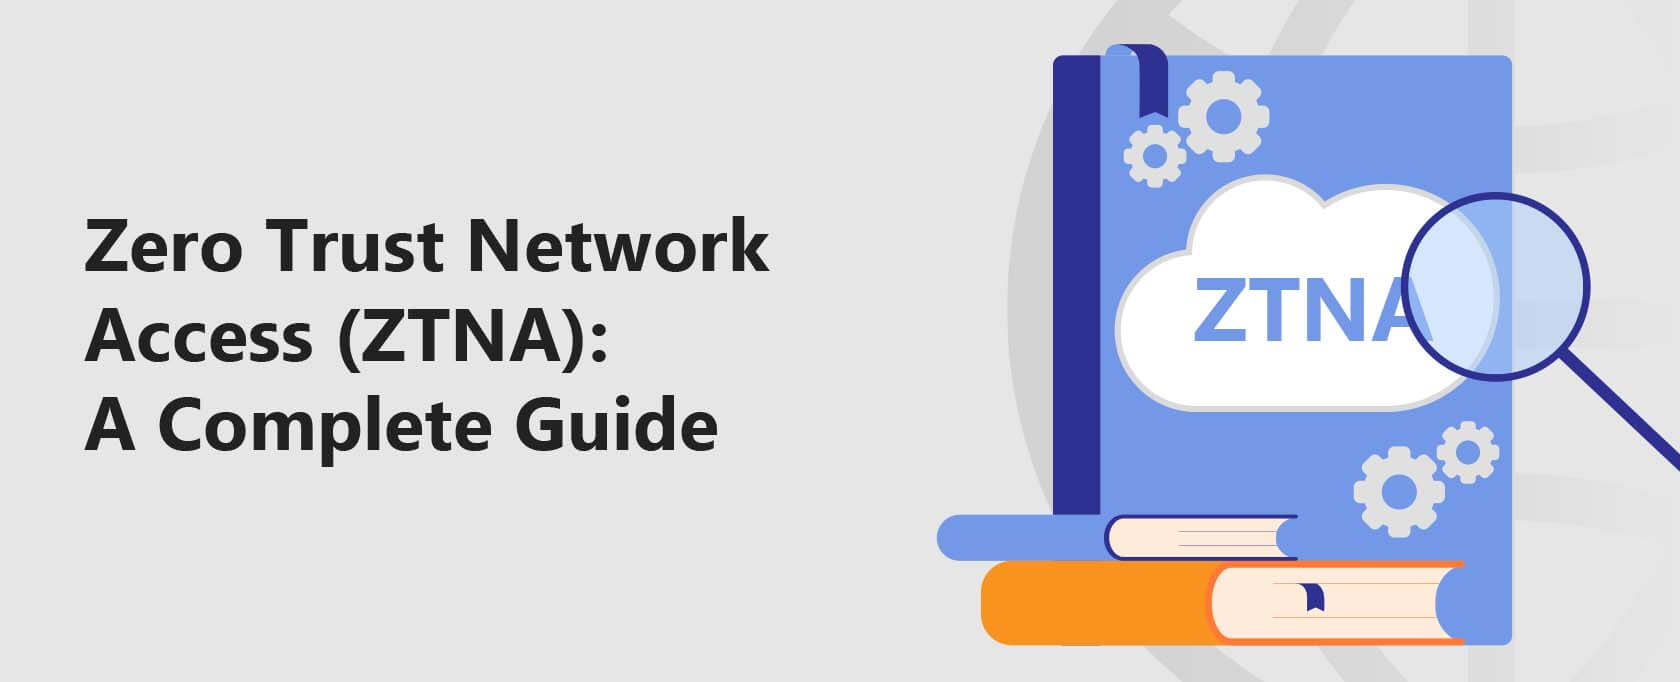 Zero Trust Network Access (ZTNA): A Complete Guide